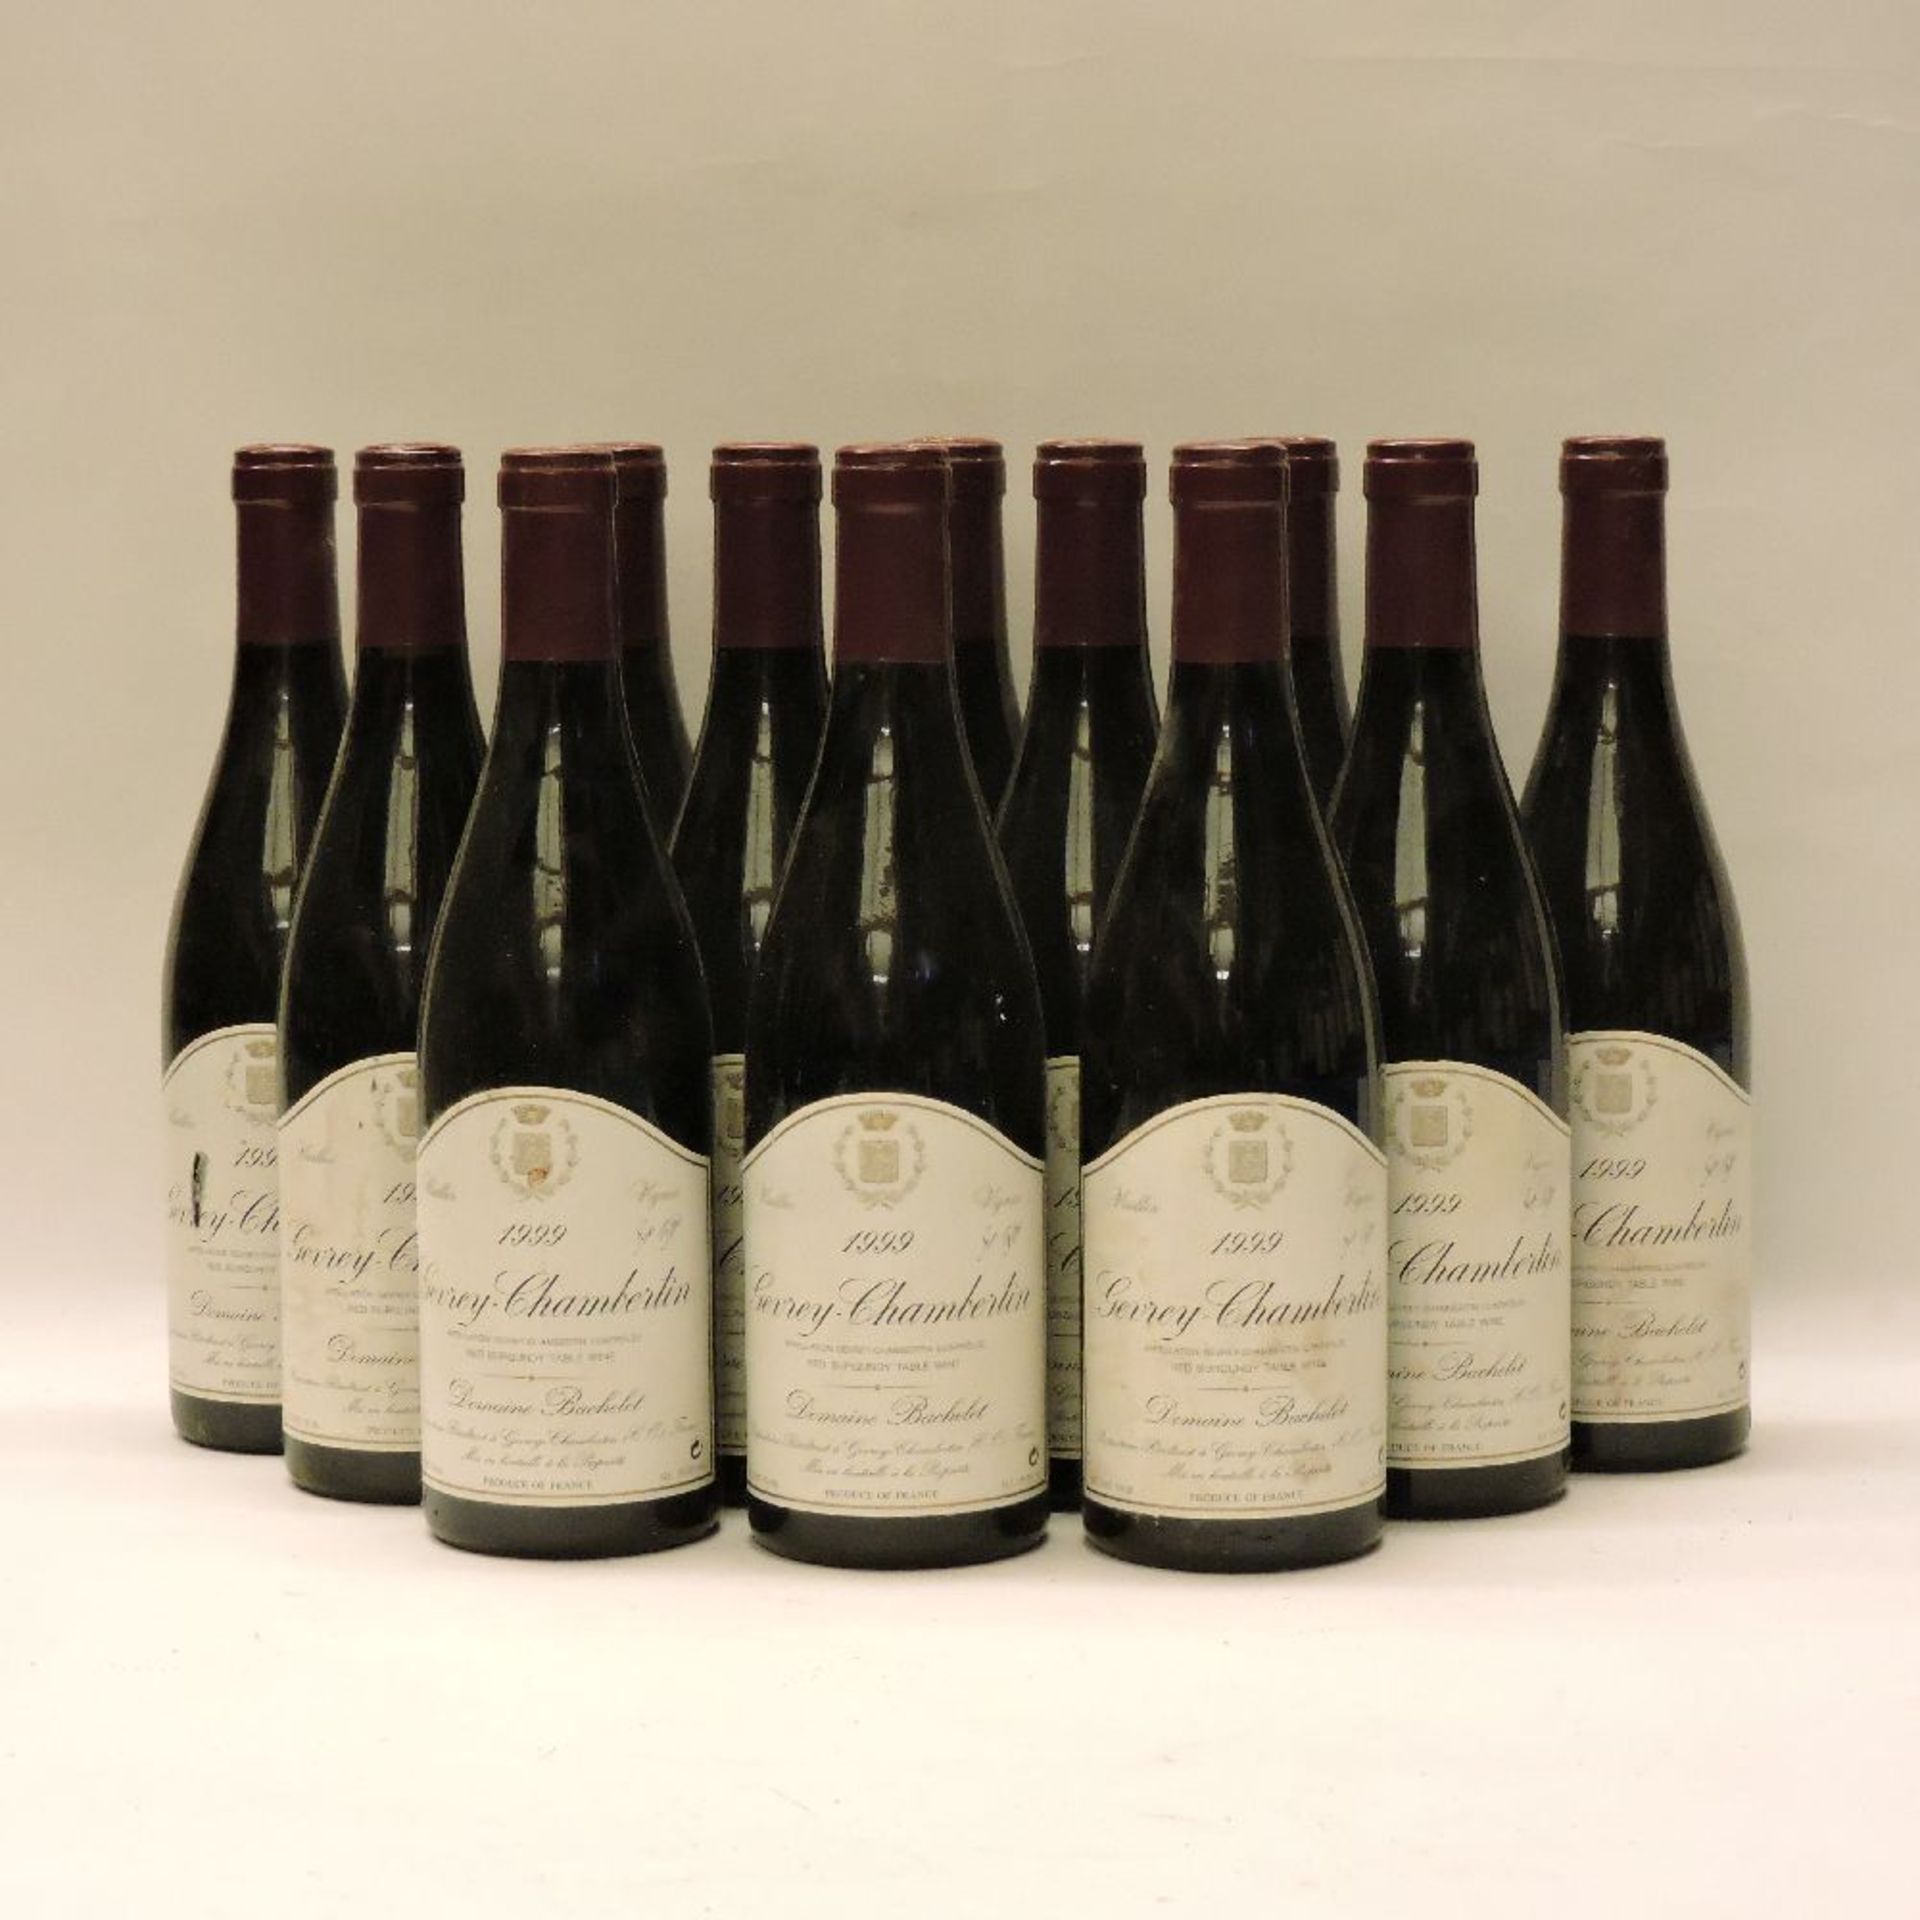 Gevrey-Chambertin, Vieilles Vignes, Bachelet, 1999, twelve bottles (slight label foxing)